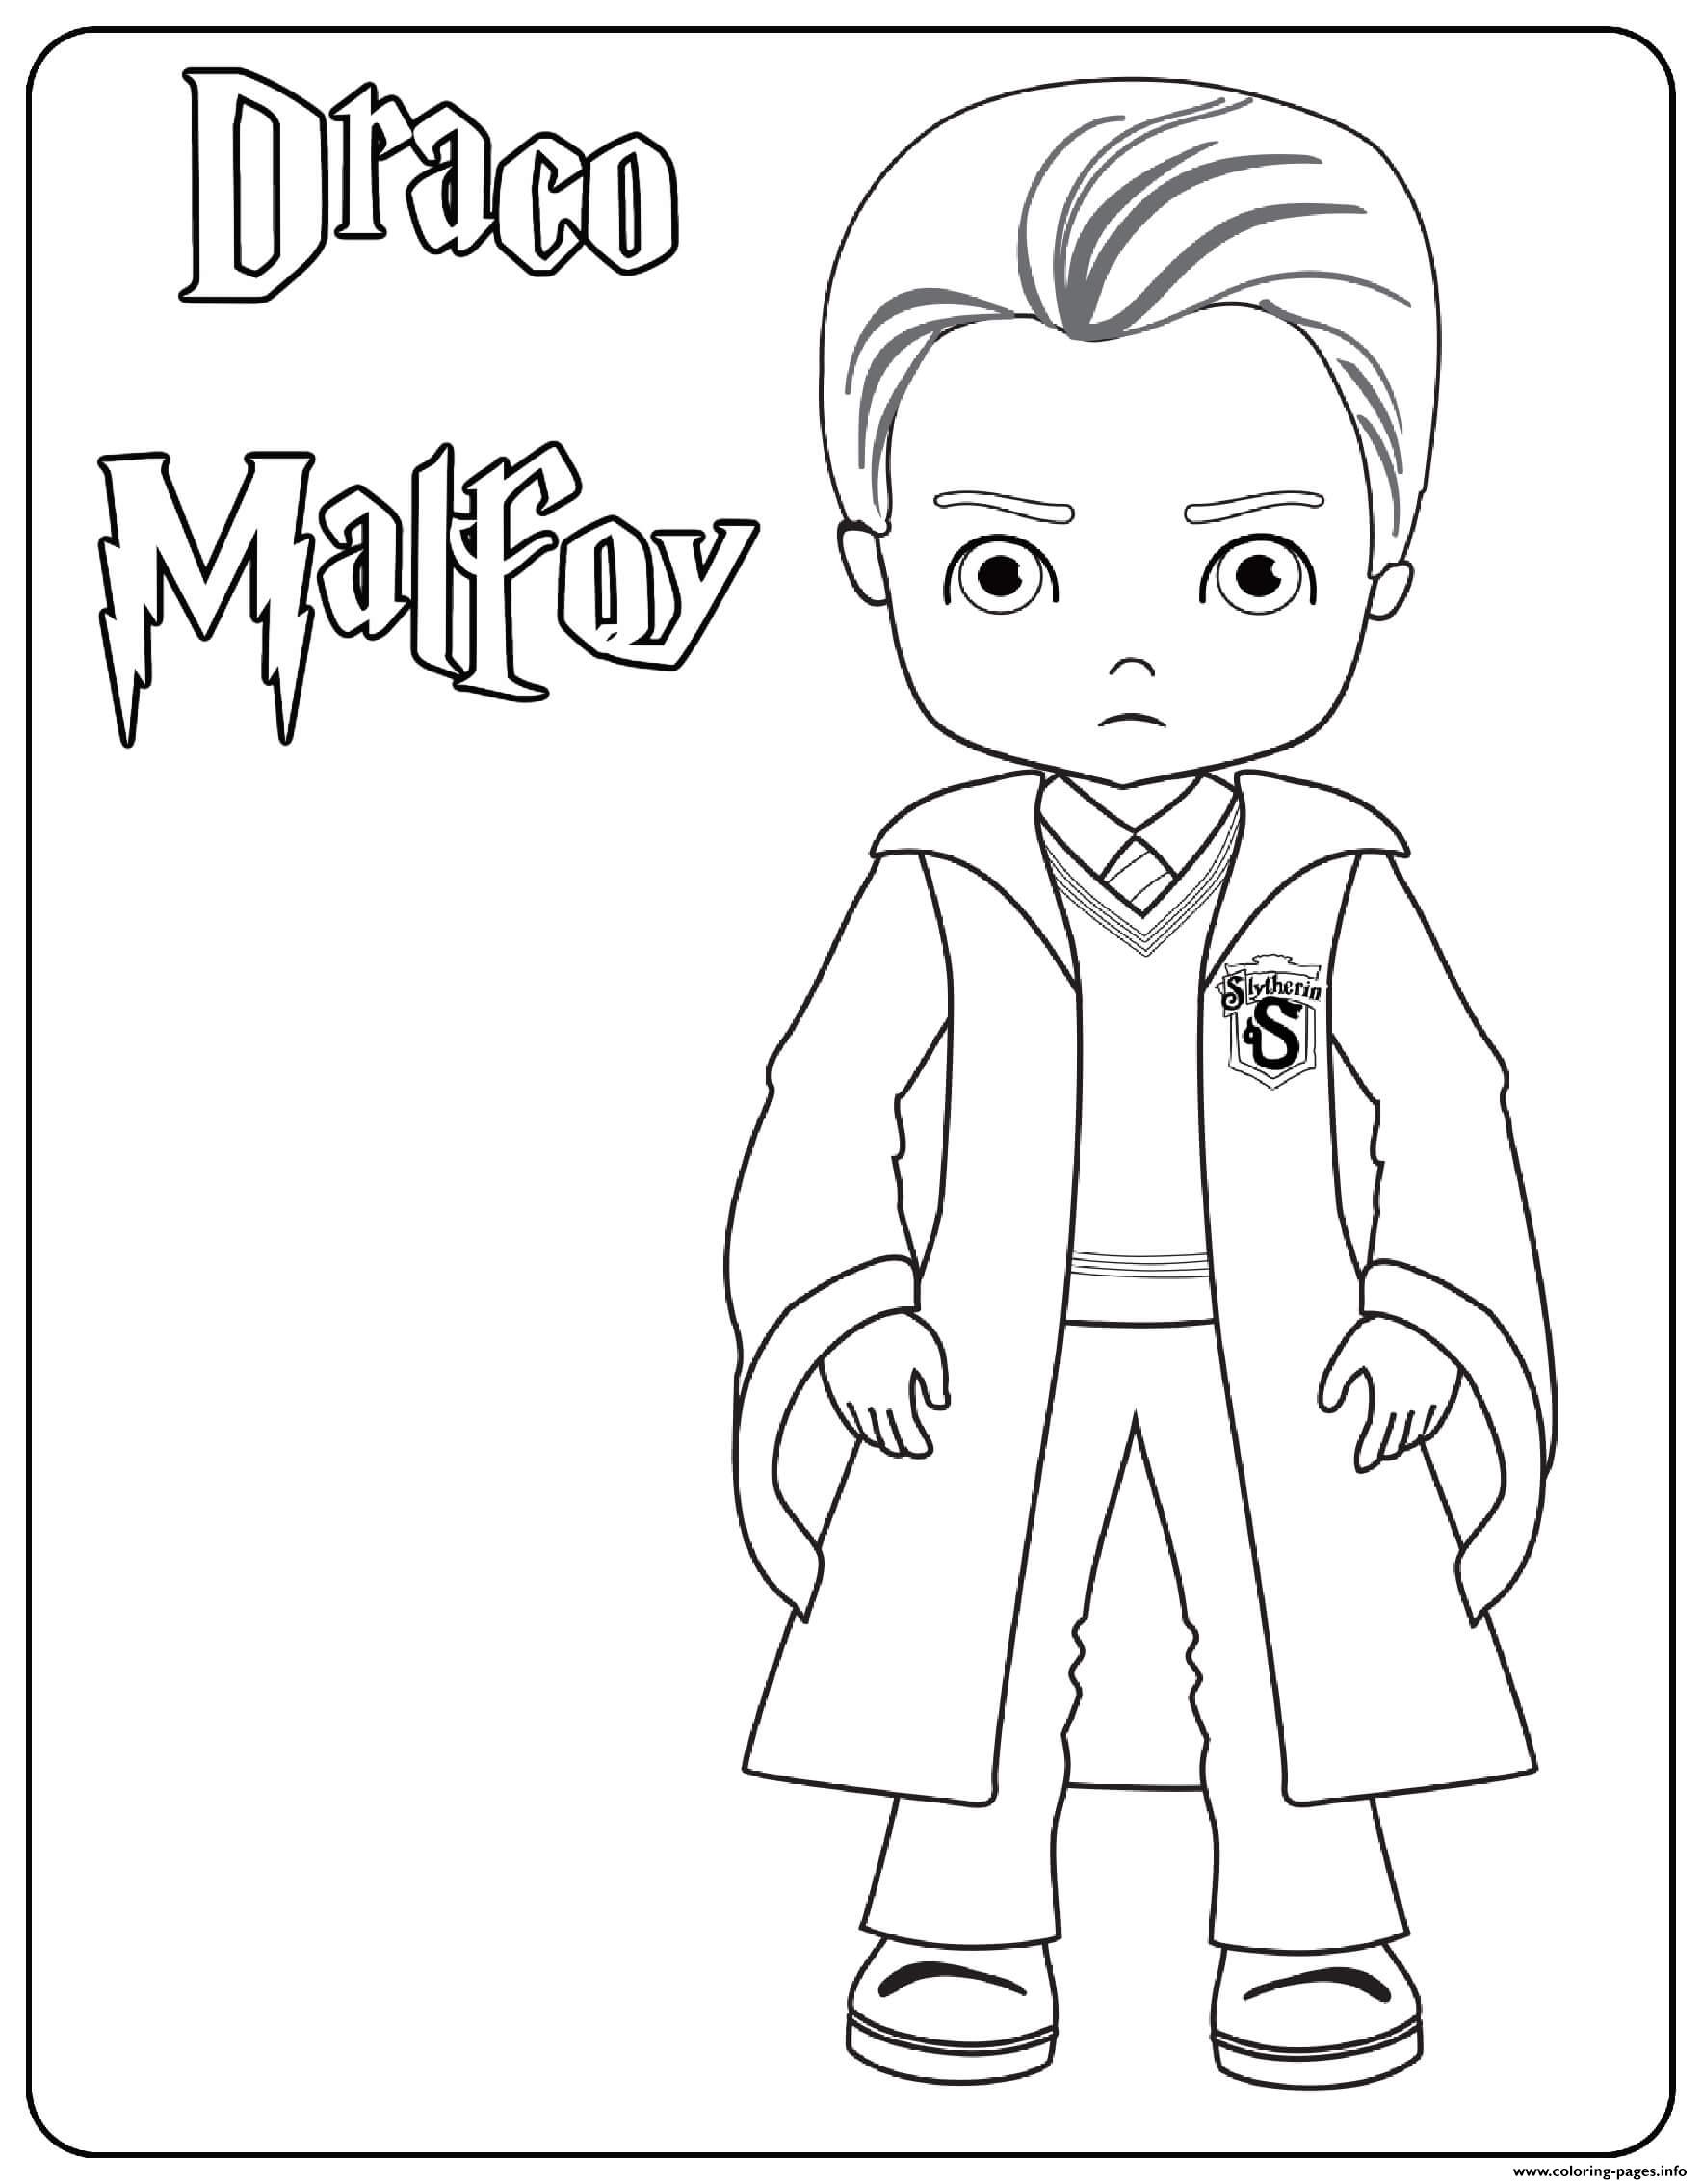 Draco Malfoy coloring